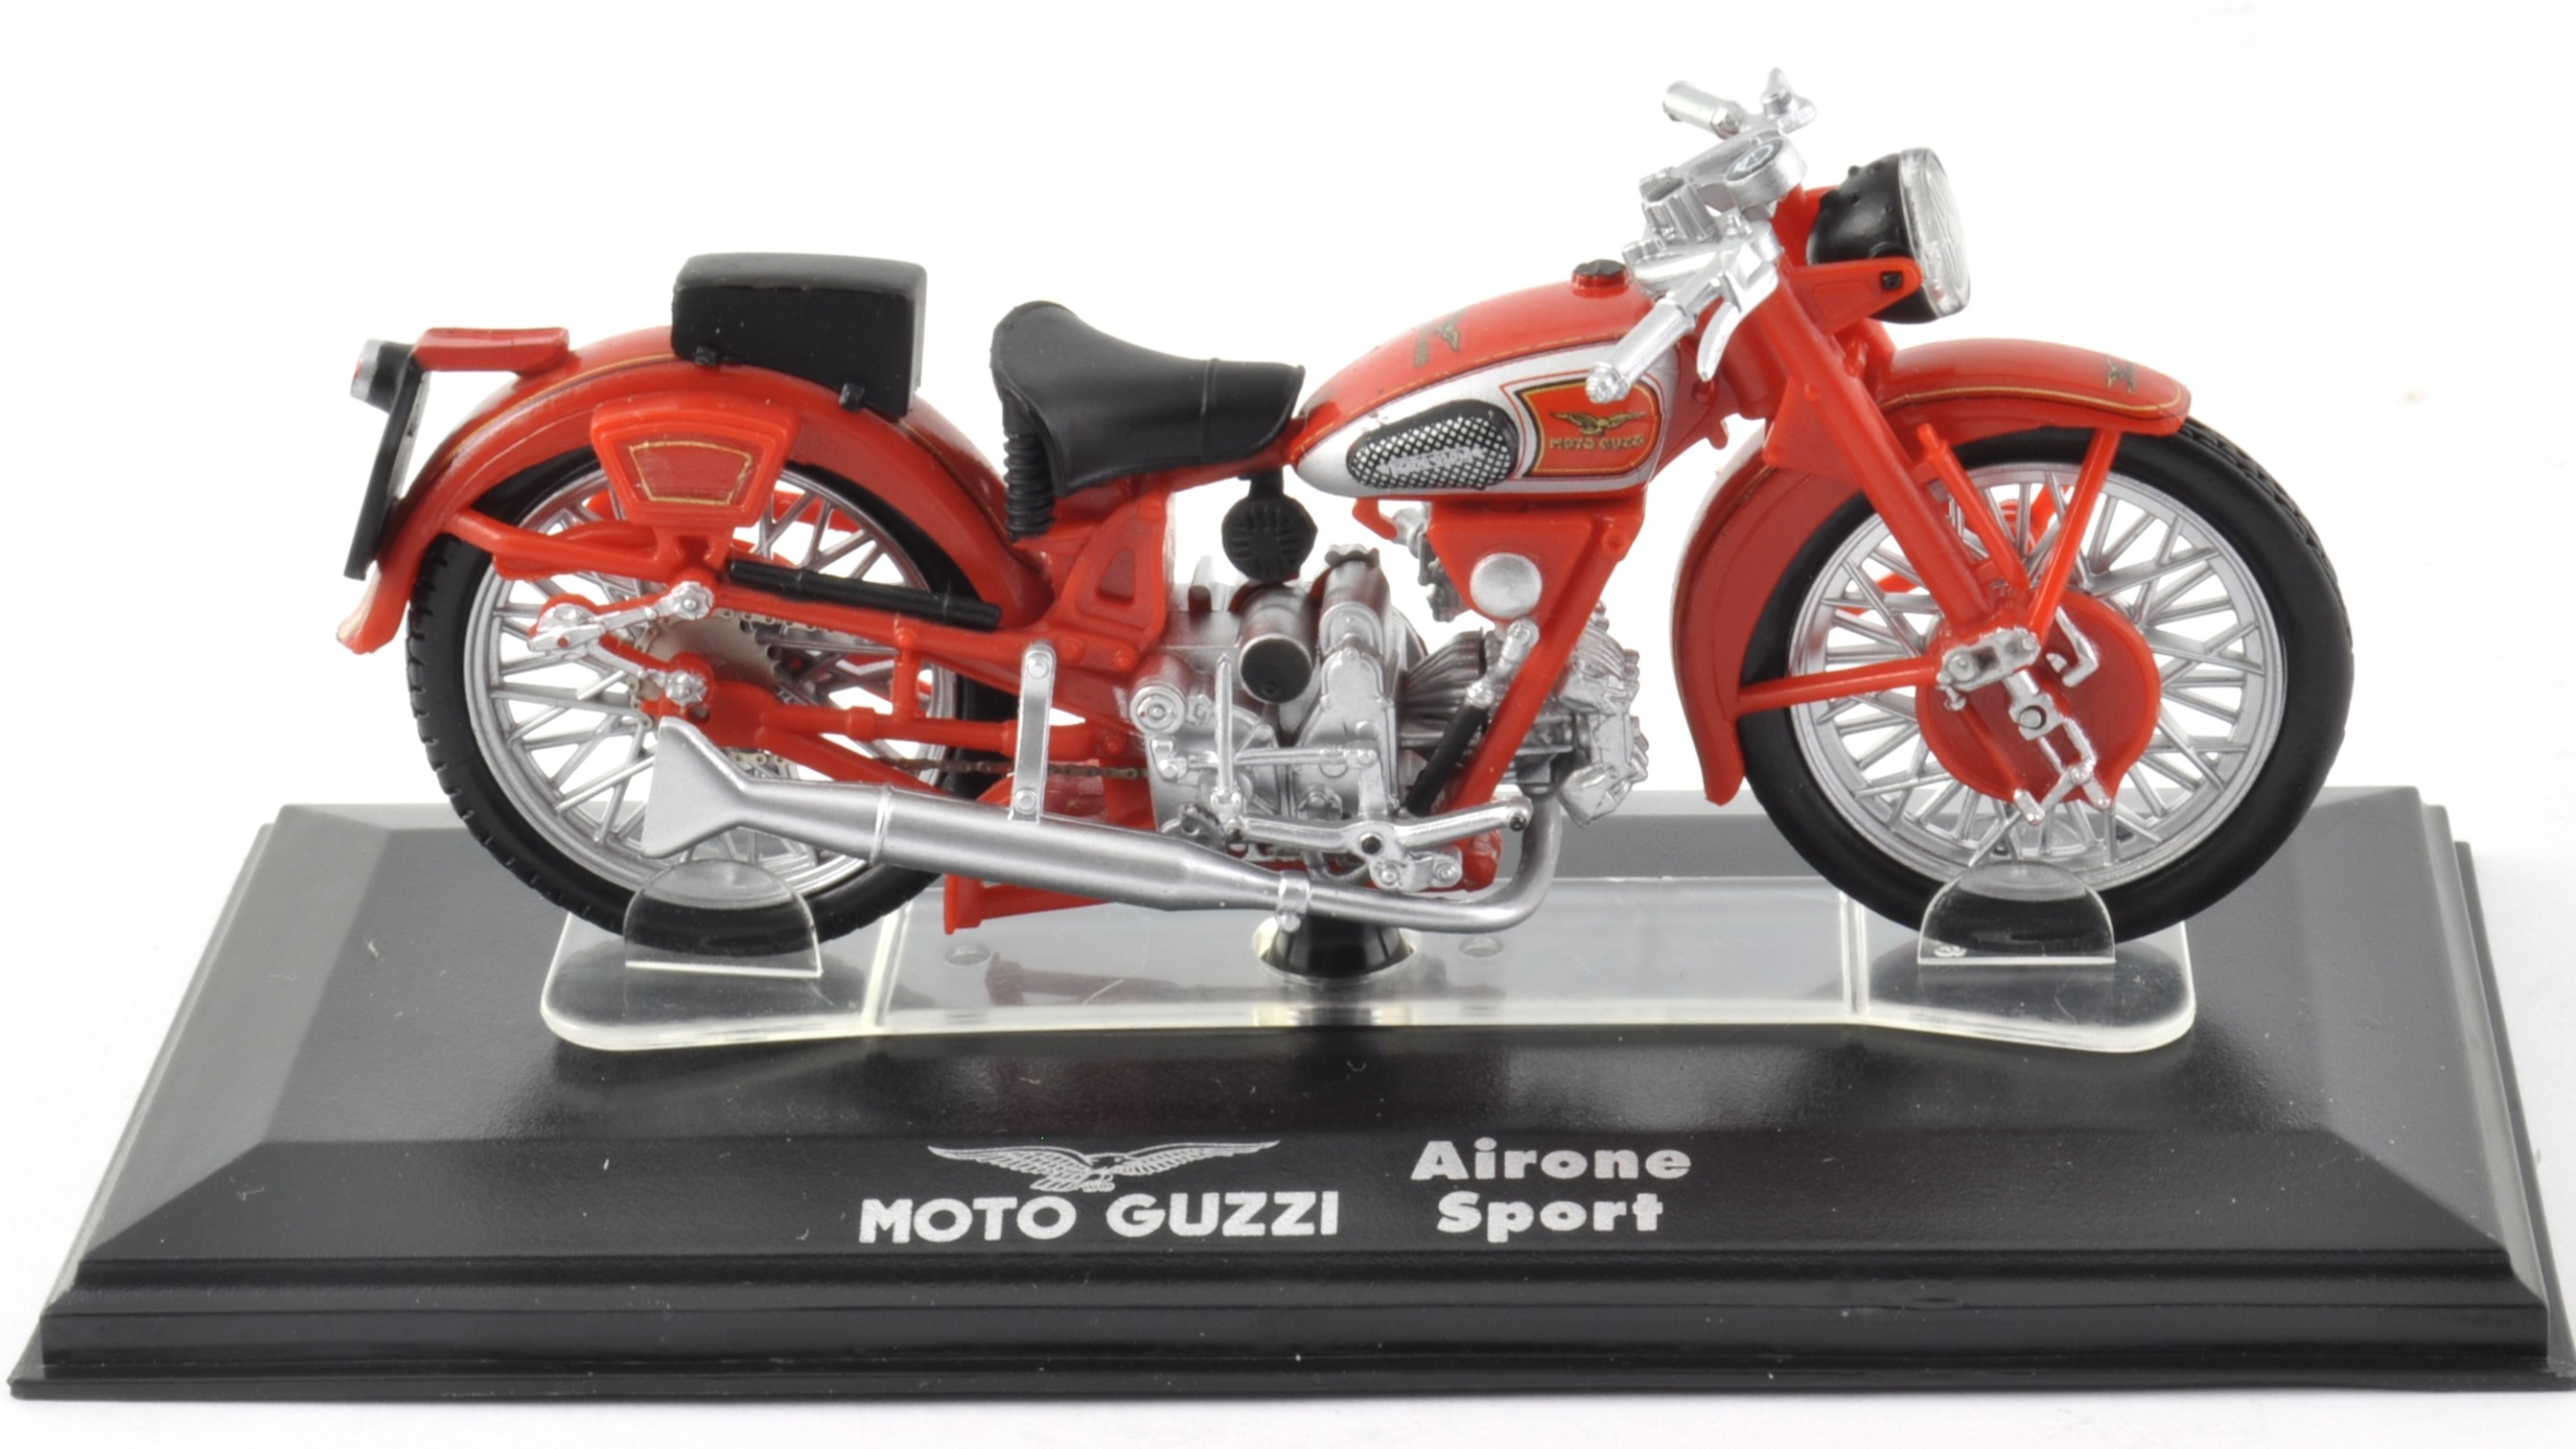 Moto Guzzi Airone Sport